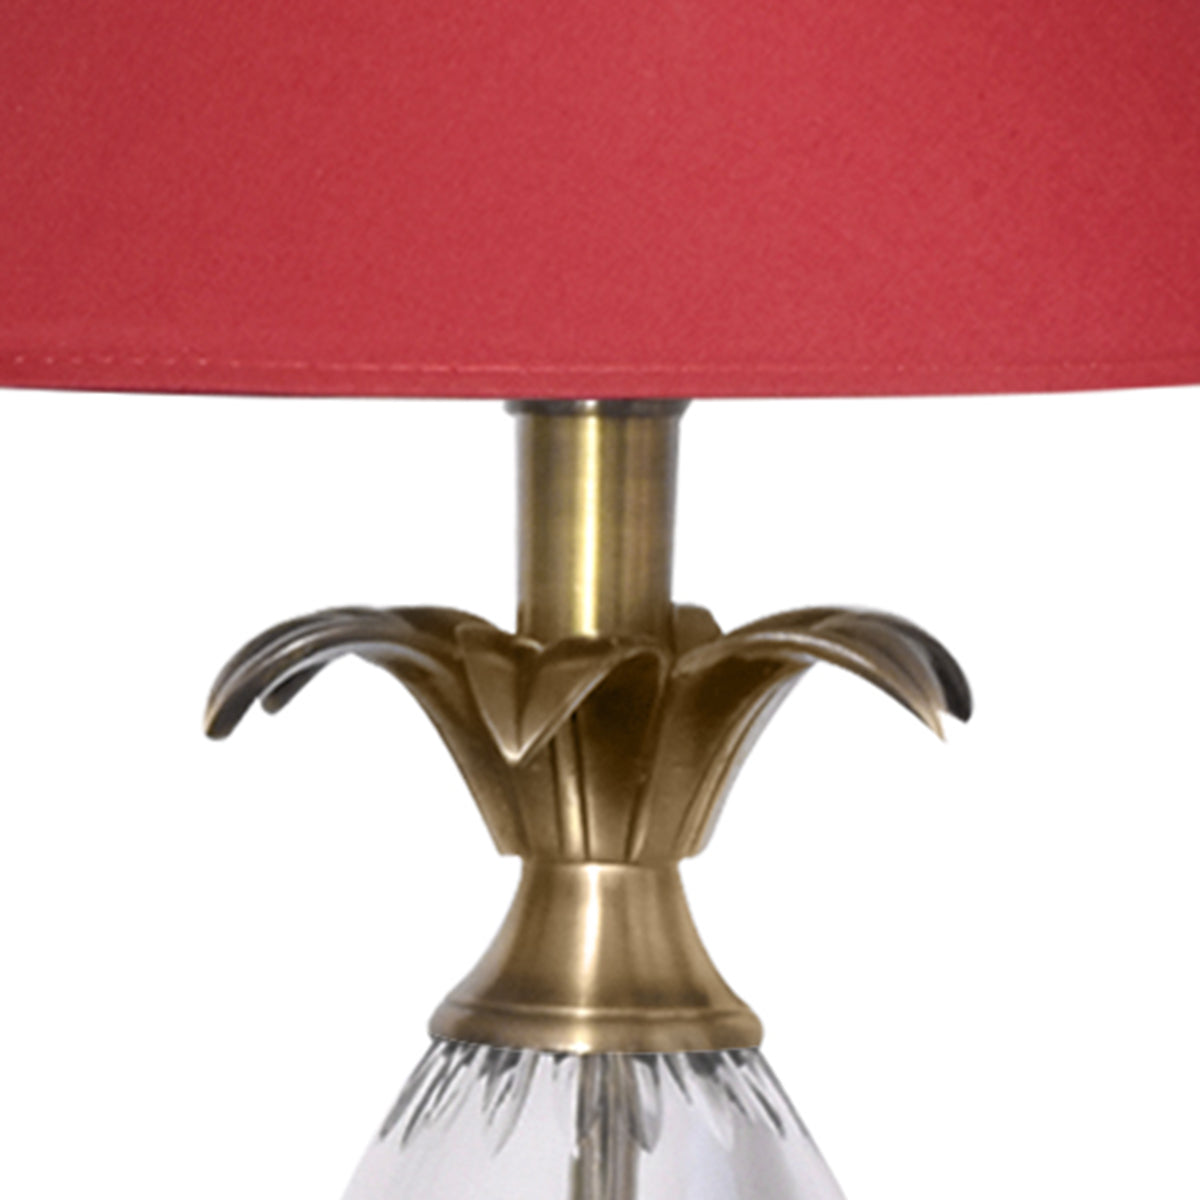 Detec Modern Maroon Fabric Shade Table Lamp